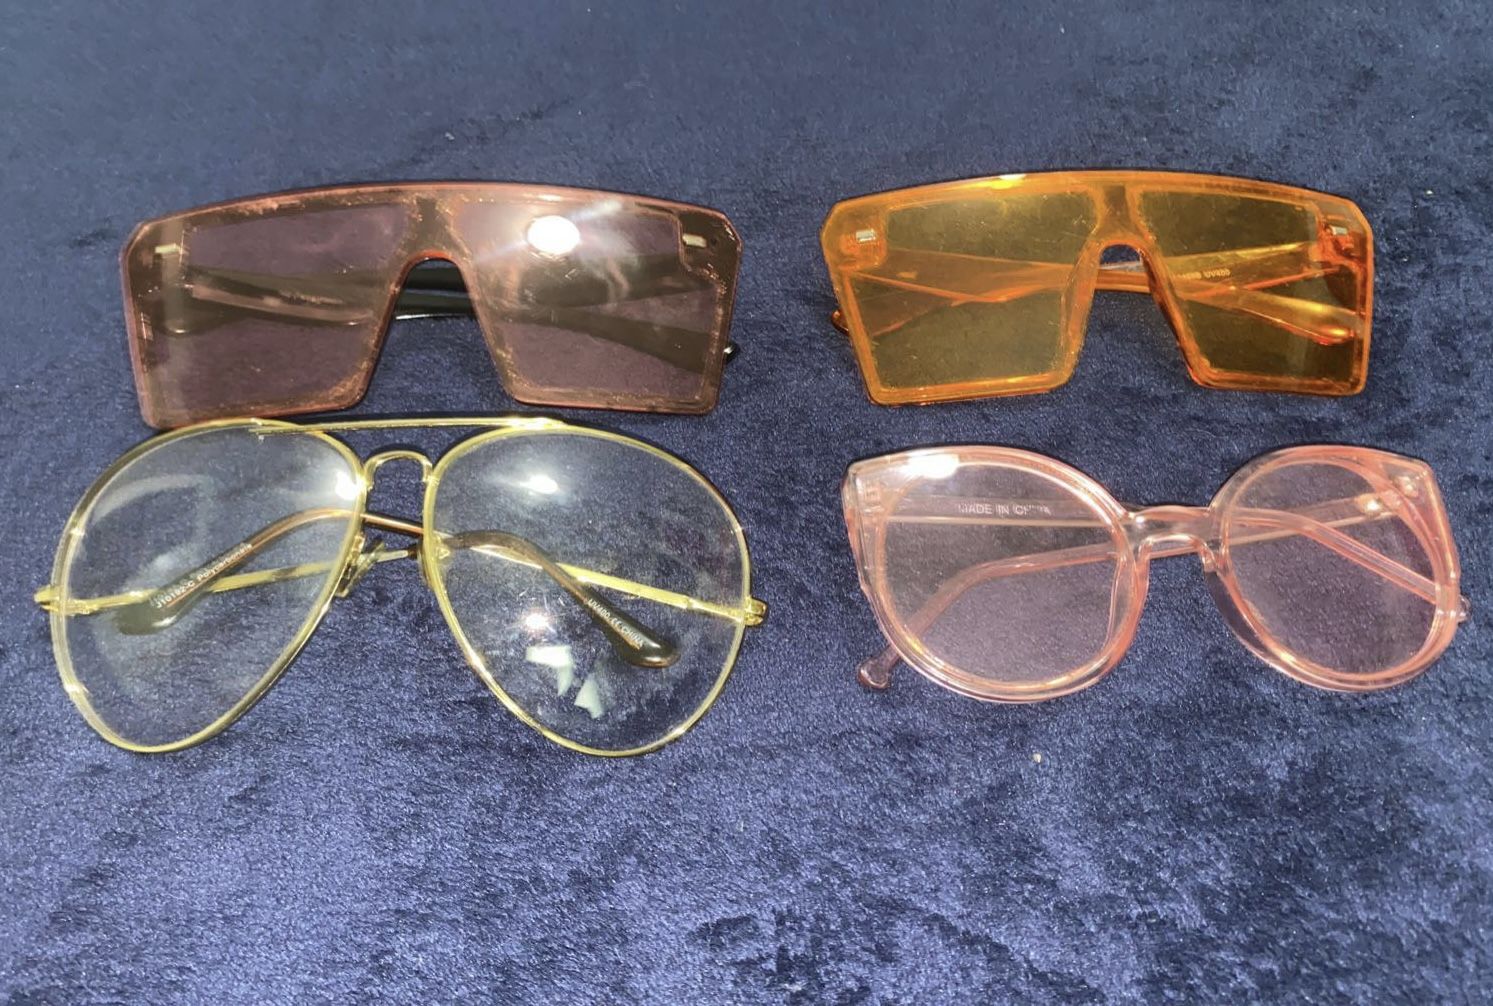 SET of 4 Fashion Sunglasses